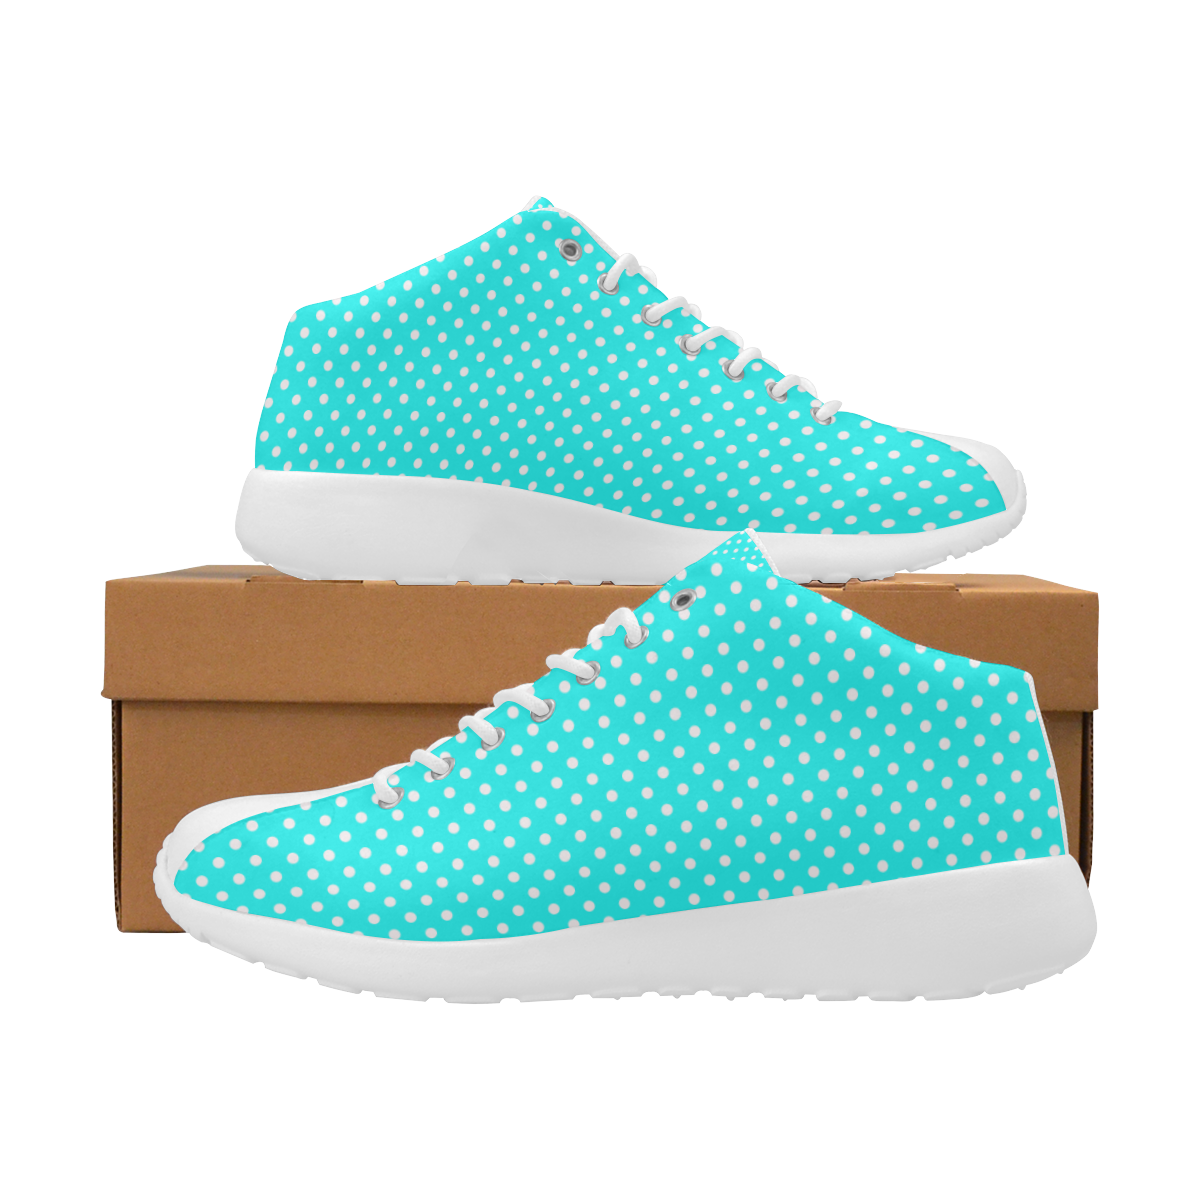 Baby blue polka dots Women's Basketball Training Shoes (Model 47502)